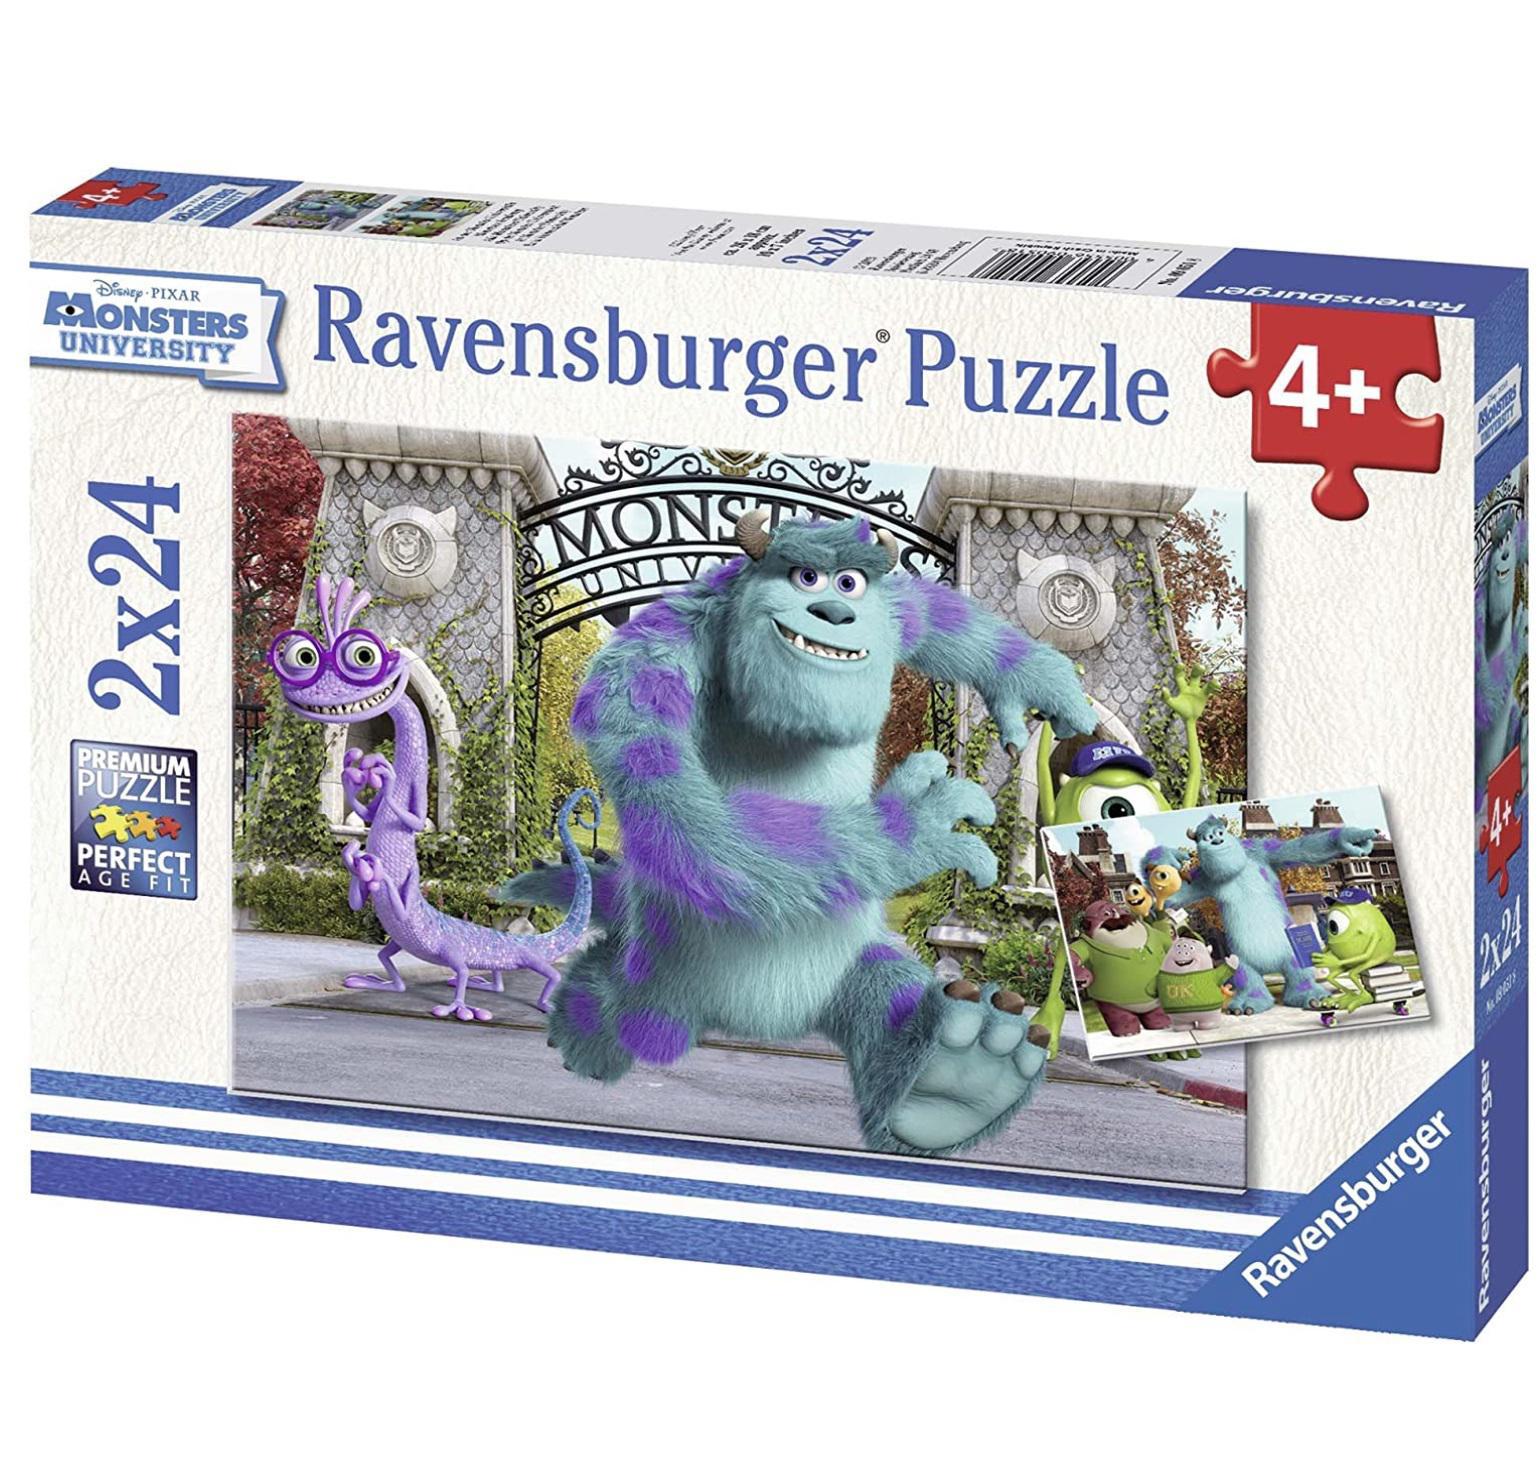 Ravensburger Jigsaw Puzzle | Disney Pixar: At Monsters University 2 x 24 Piece